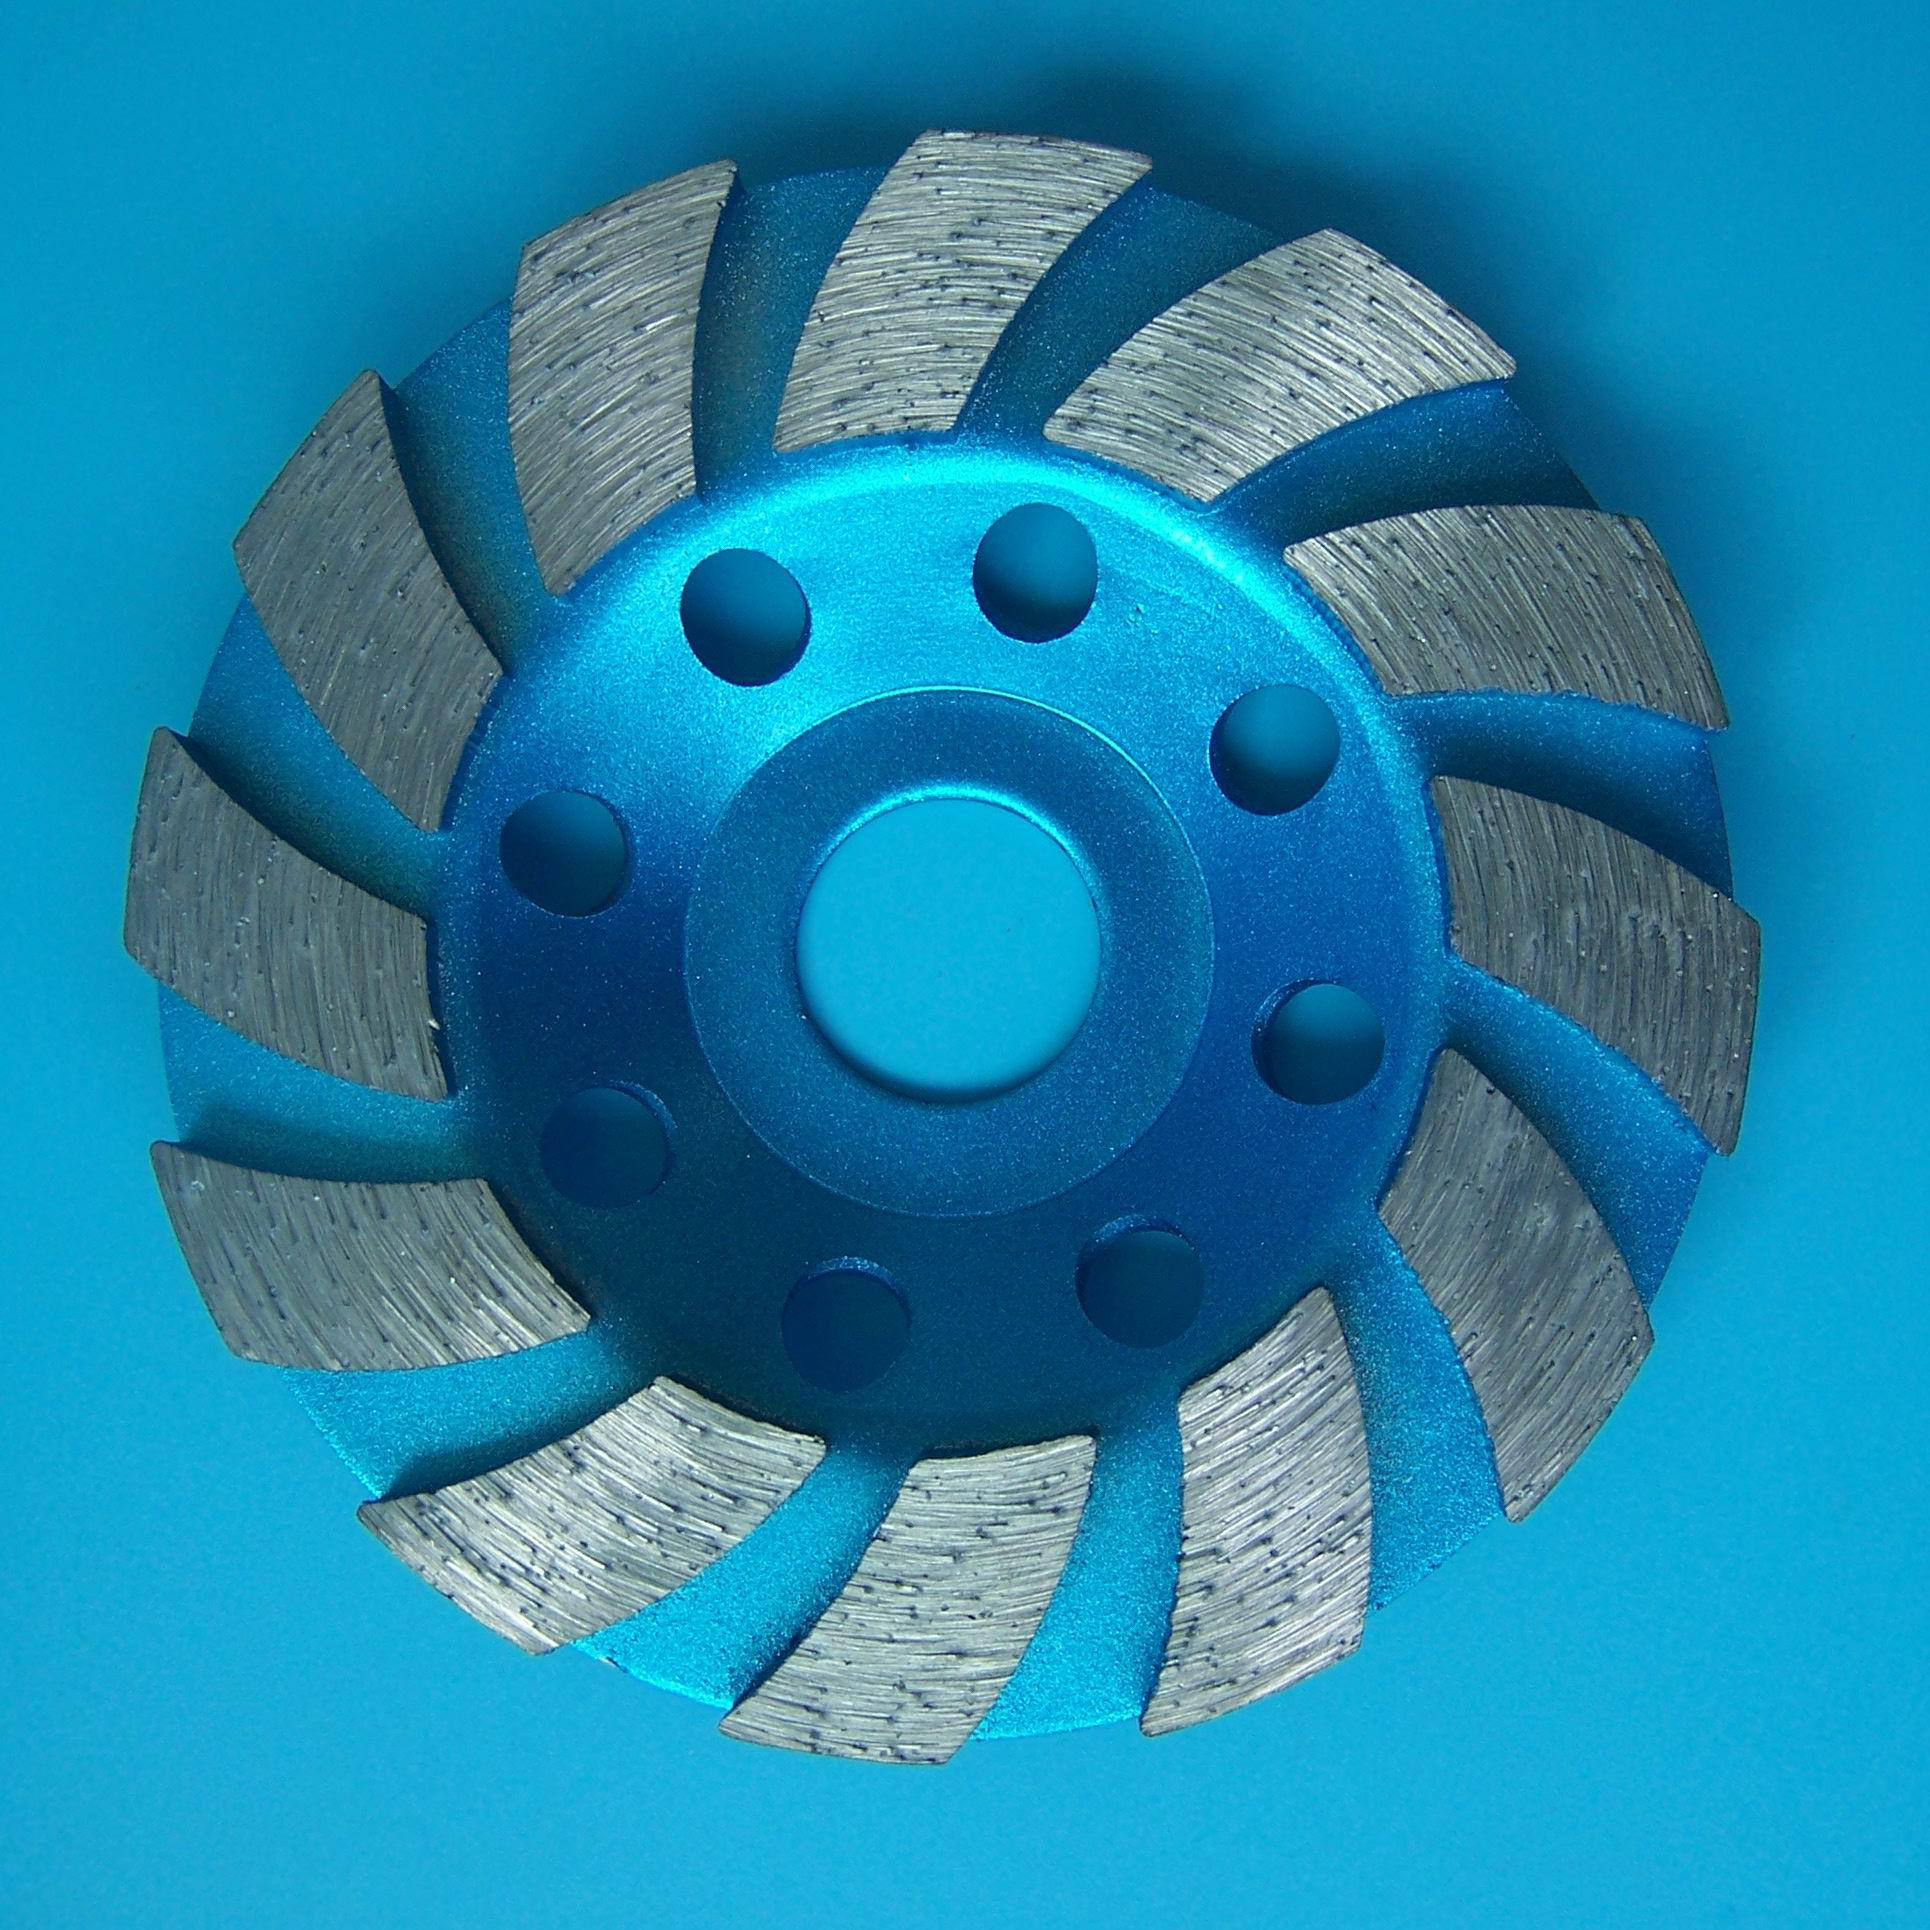 Hantechn@ Concrete Stone Polishing Turbo Diamond Grinding Cup Wheel For Marble